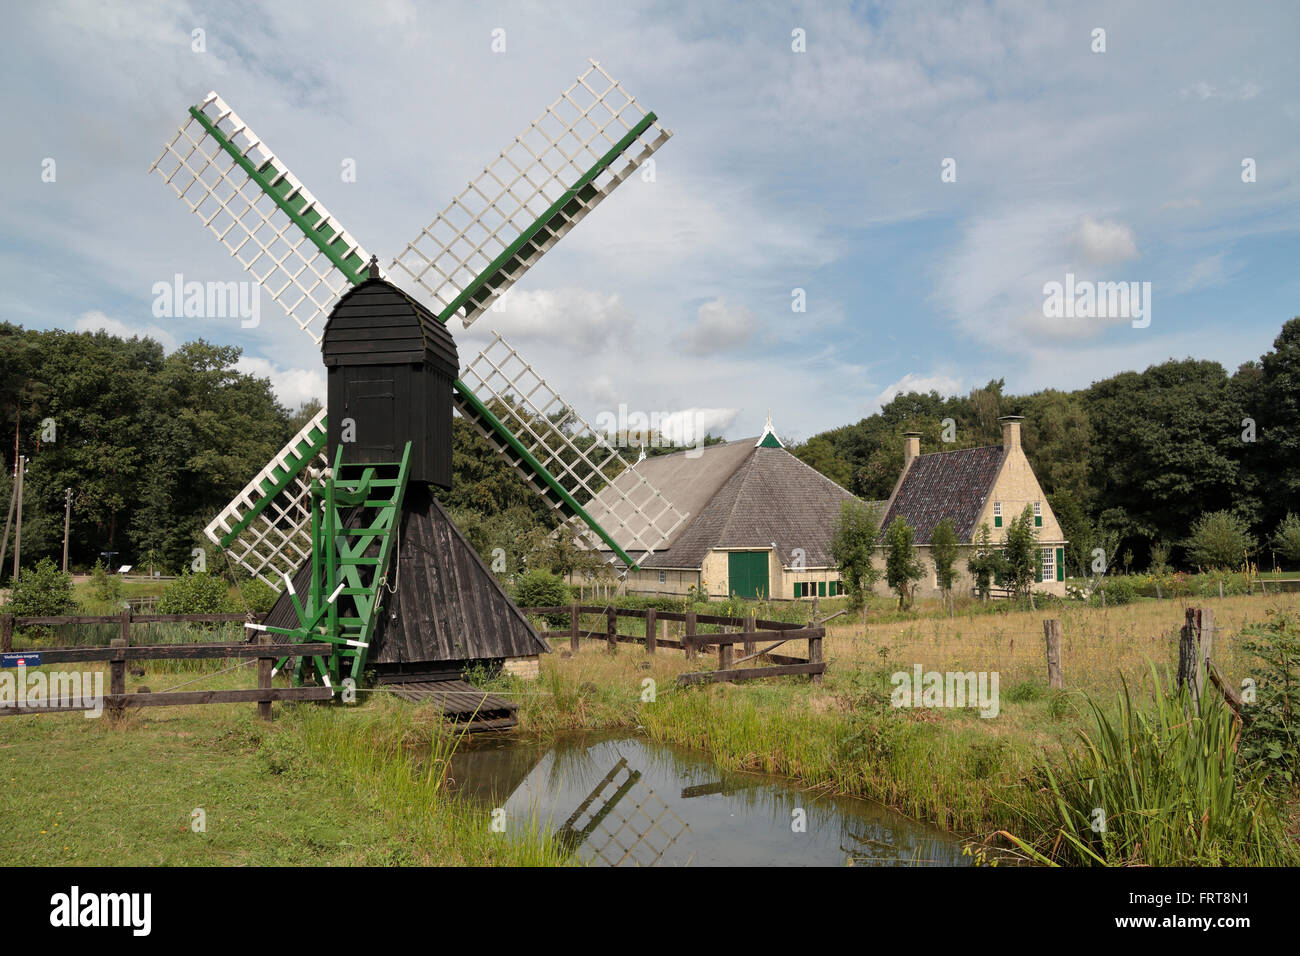 A wind-driven drainage mill from Gorredijk in the Netherlands Open Air Museum (Nederlands Openluchtmuseum), Arnhem, Netherlands. Stock Photo